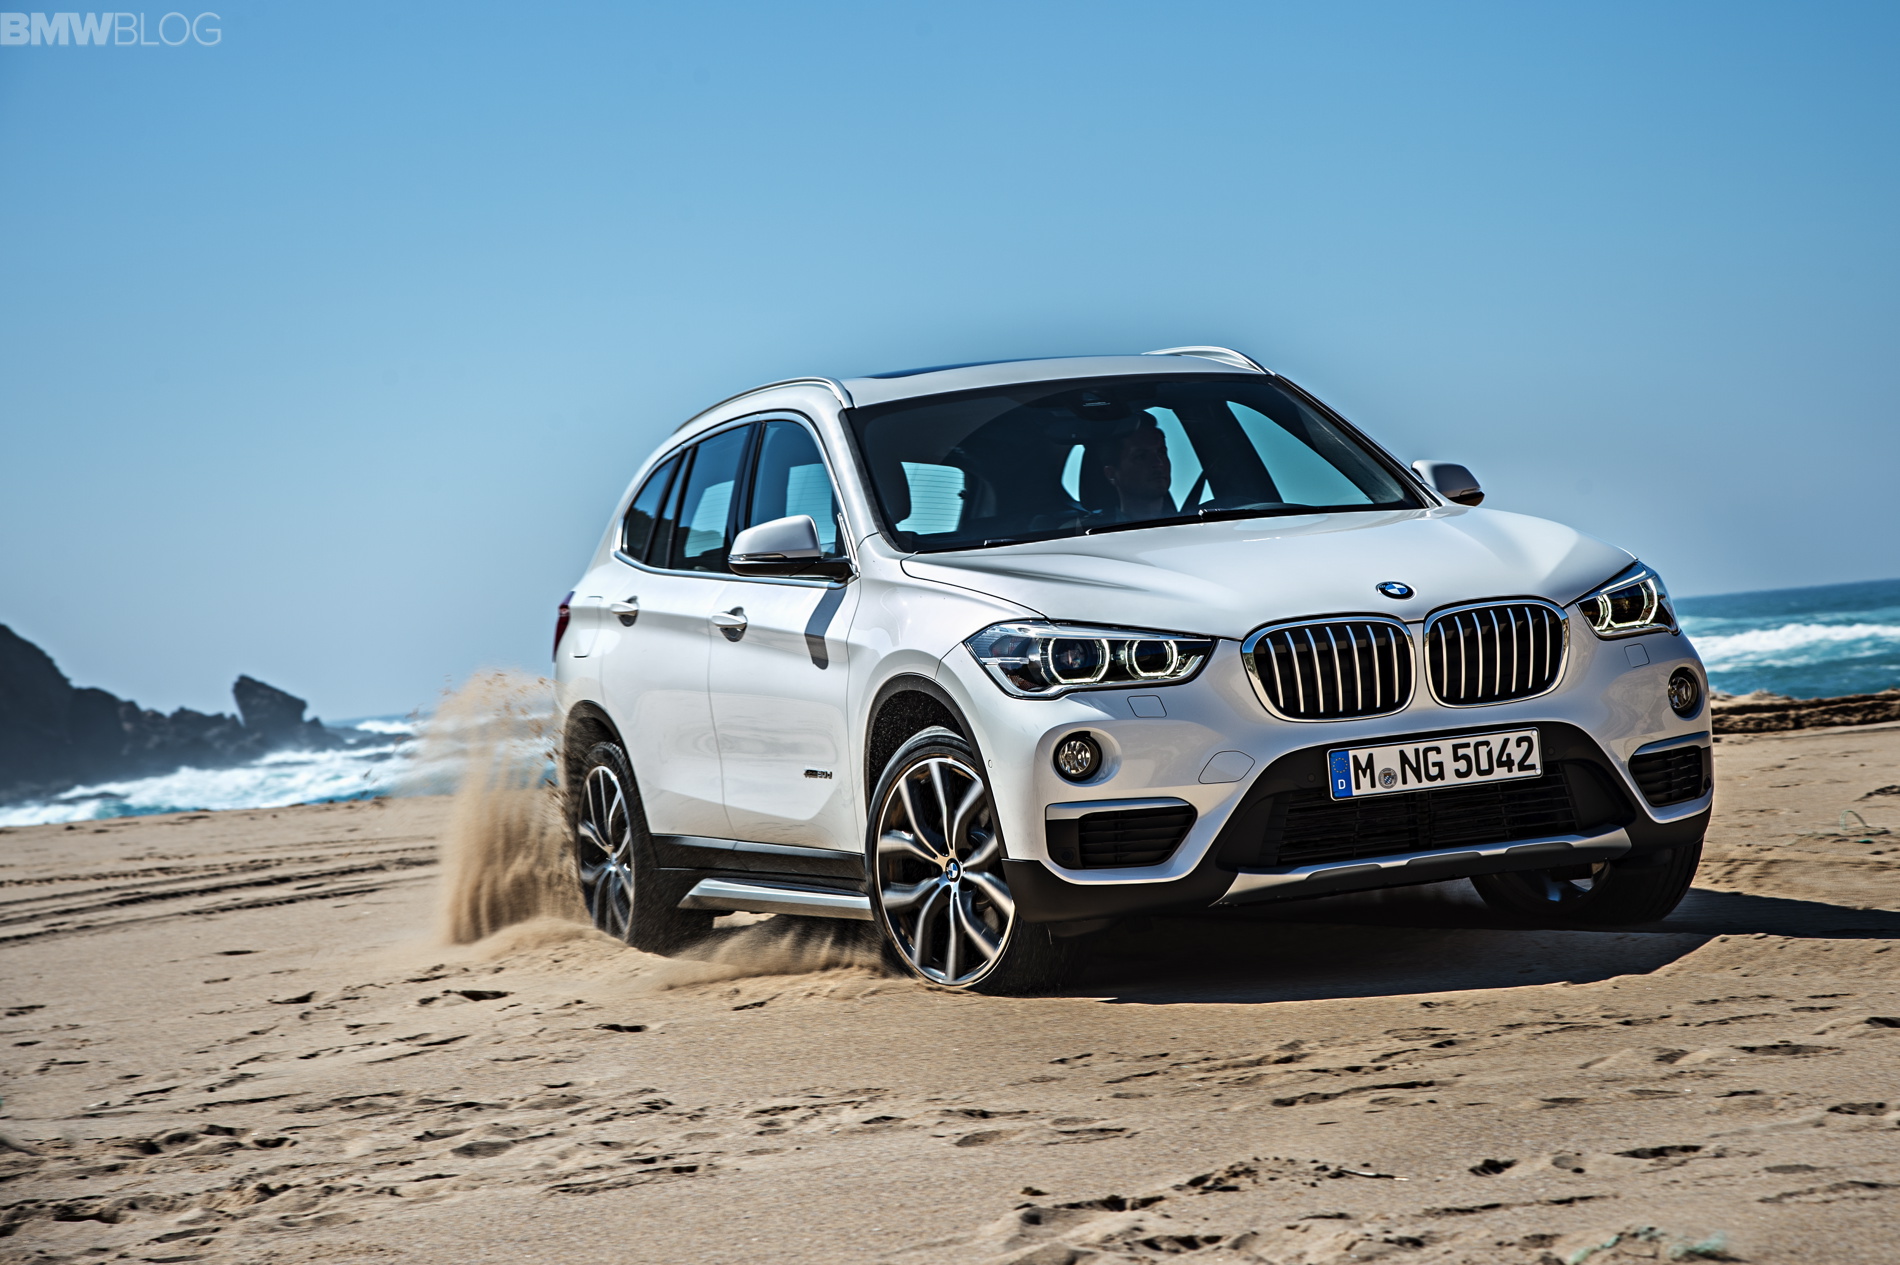 2016-BMW-X1-exterior-1900x1200-images-32.jpg